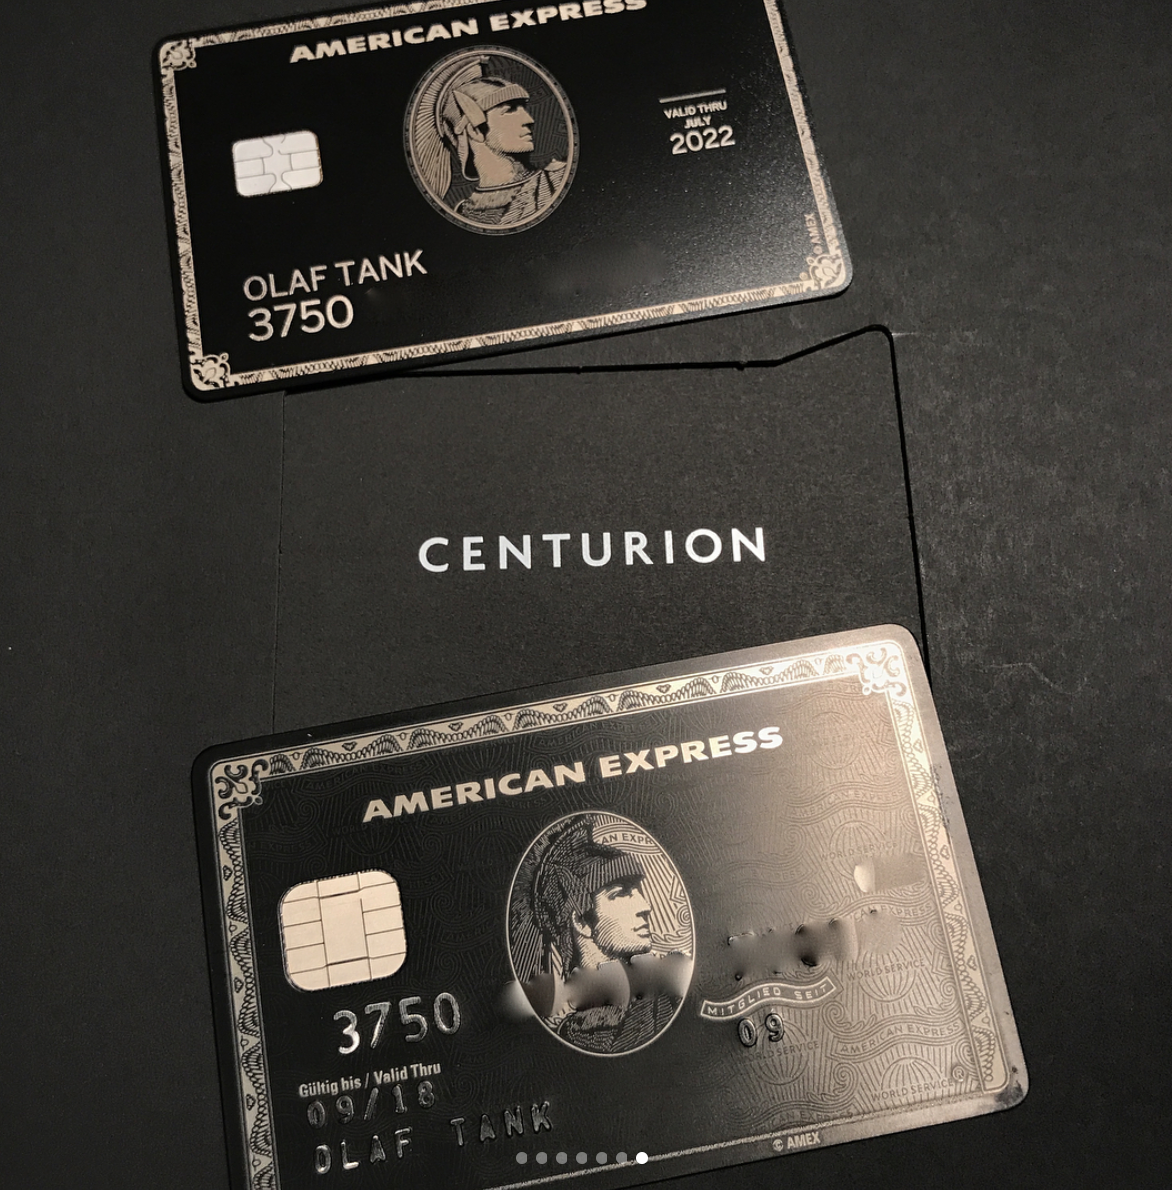 centurion black card